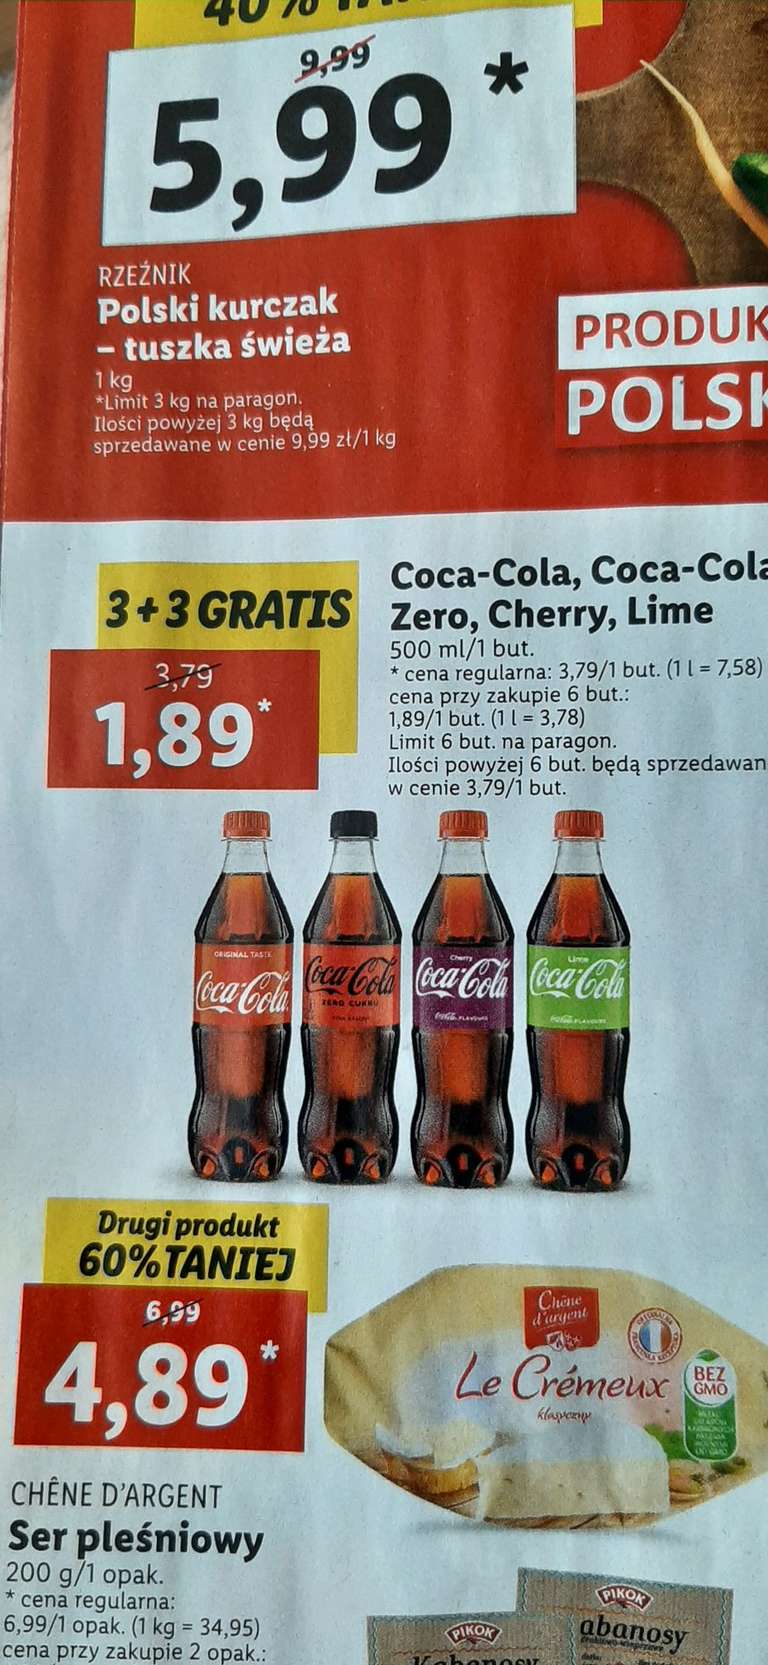 Coca-cola 0,5l 3+3 Gratis Otwarcie Lidla Radom